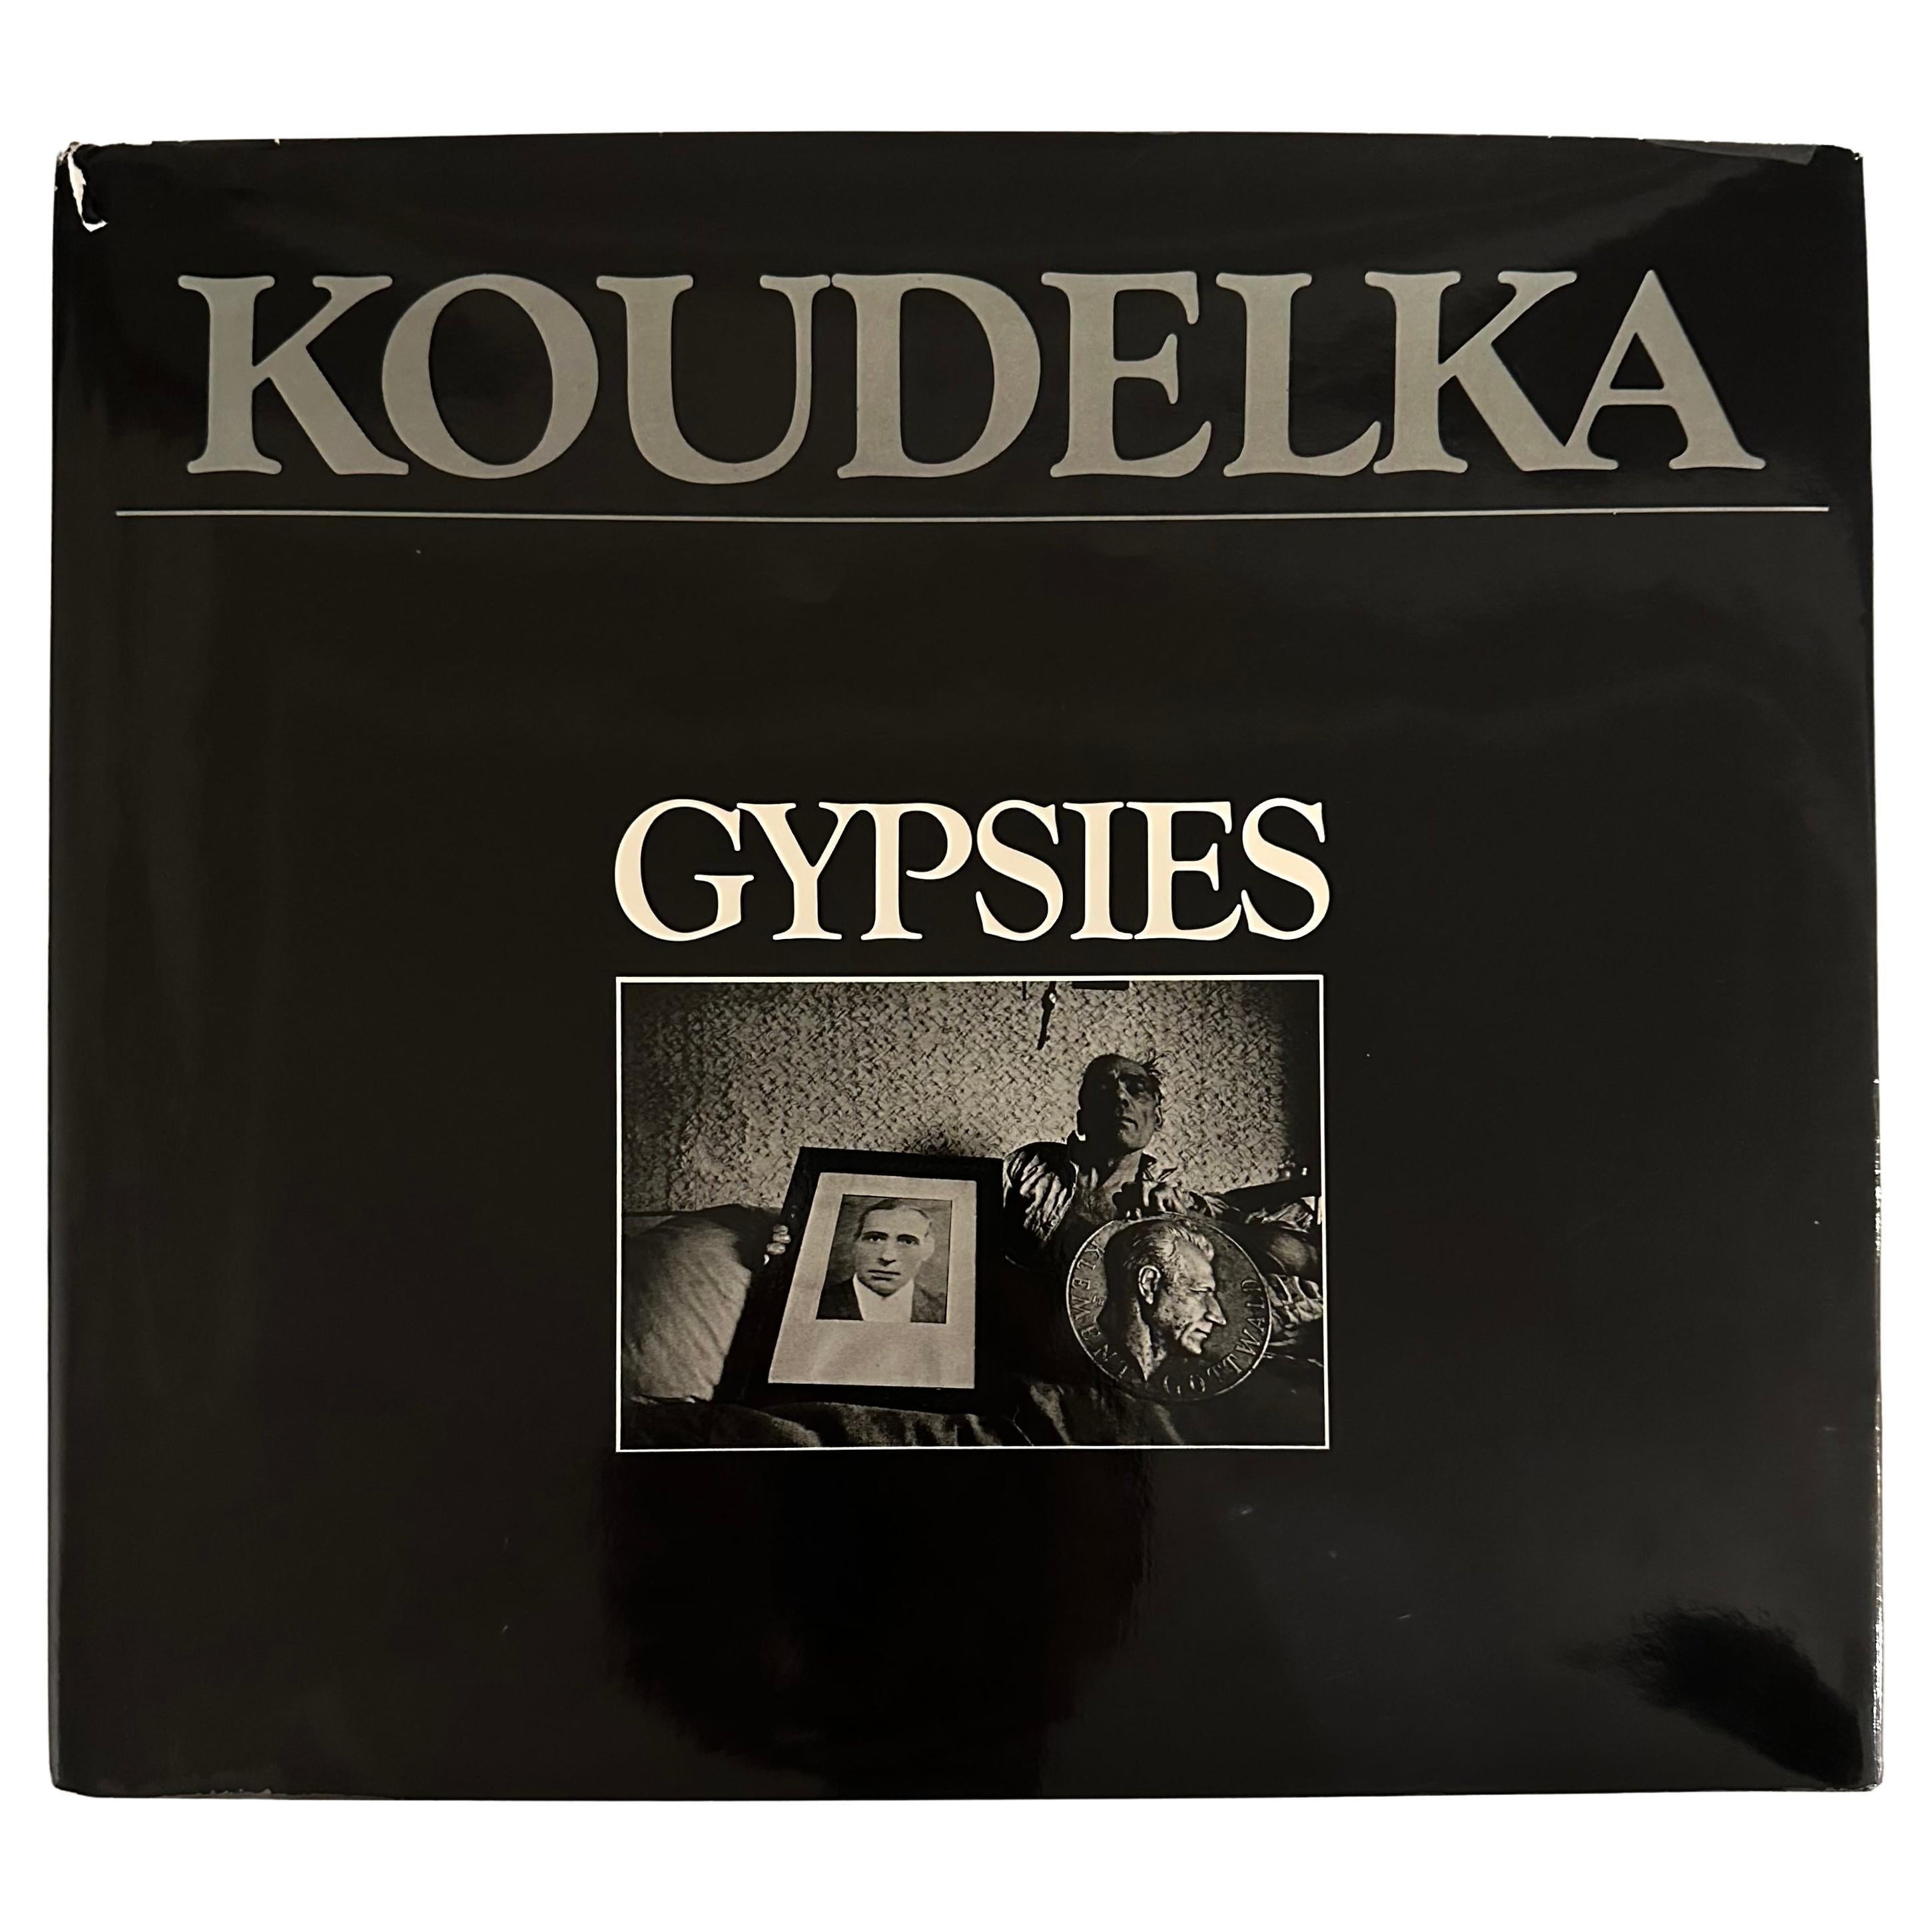 GYPSIES - Josef Koudelka - 1st U.S. edition, New York, 1975 For Sale